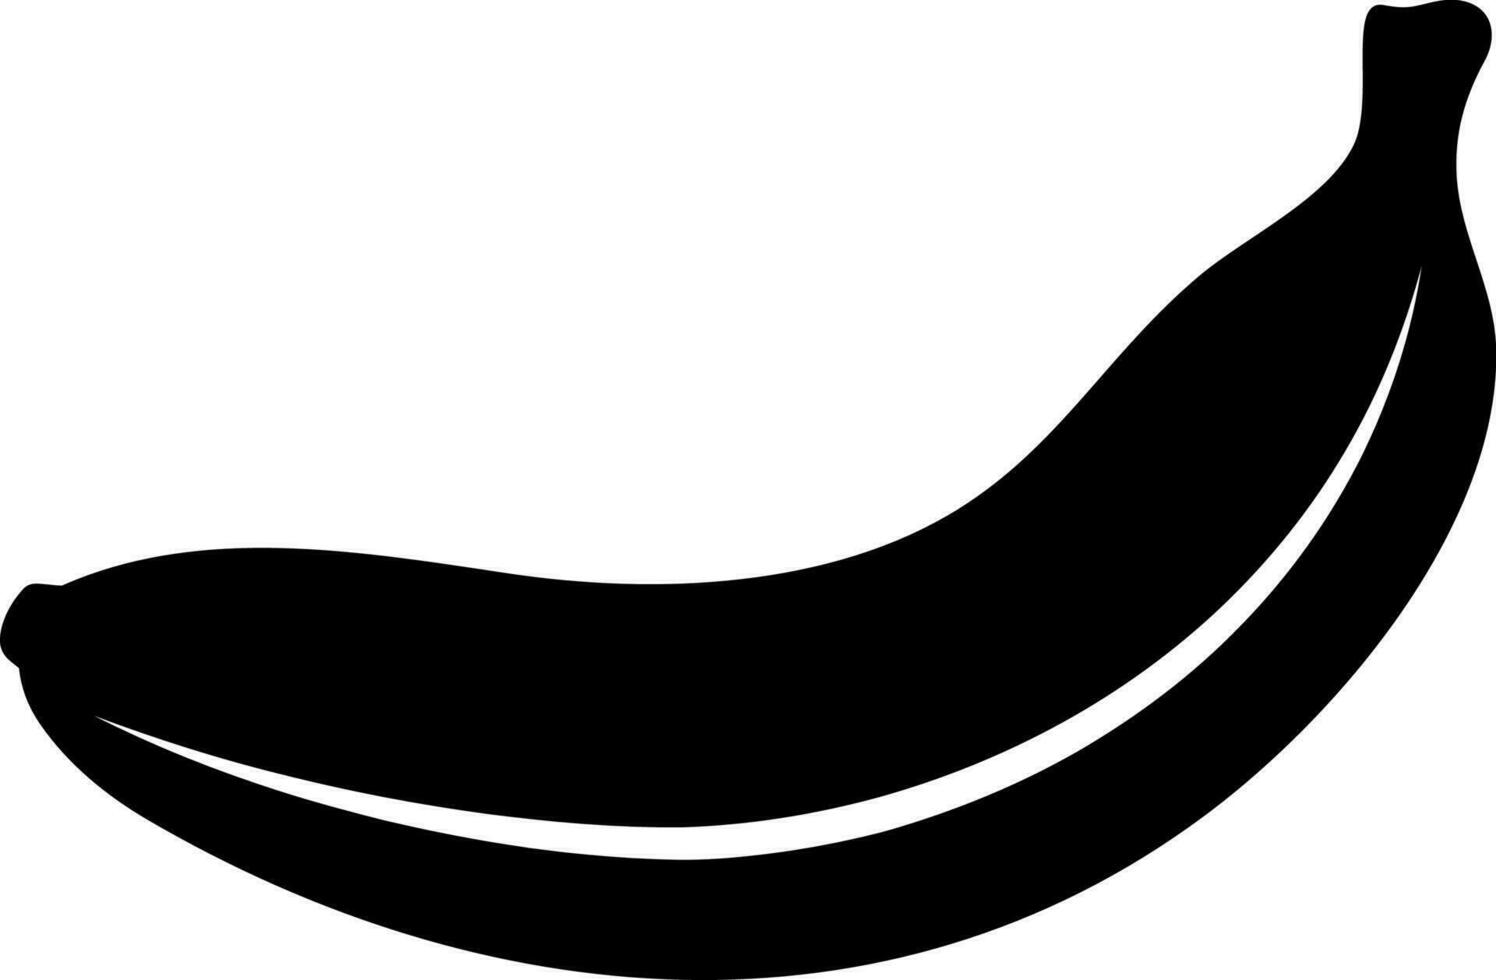 Illustration of banana glyph icon. vector